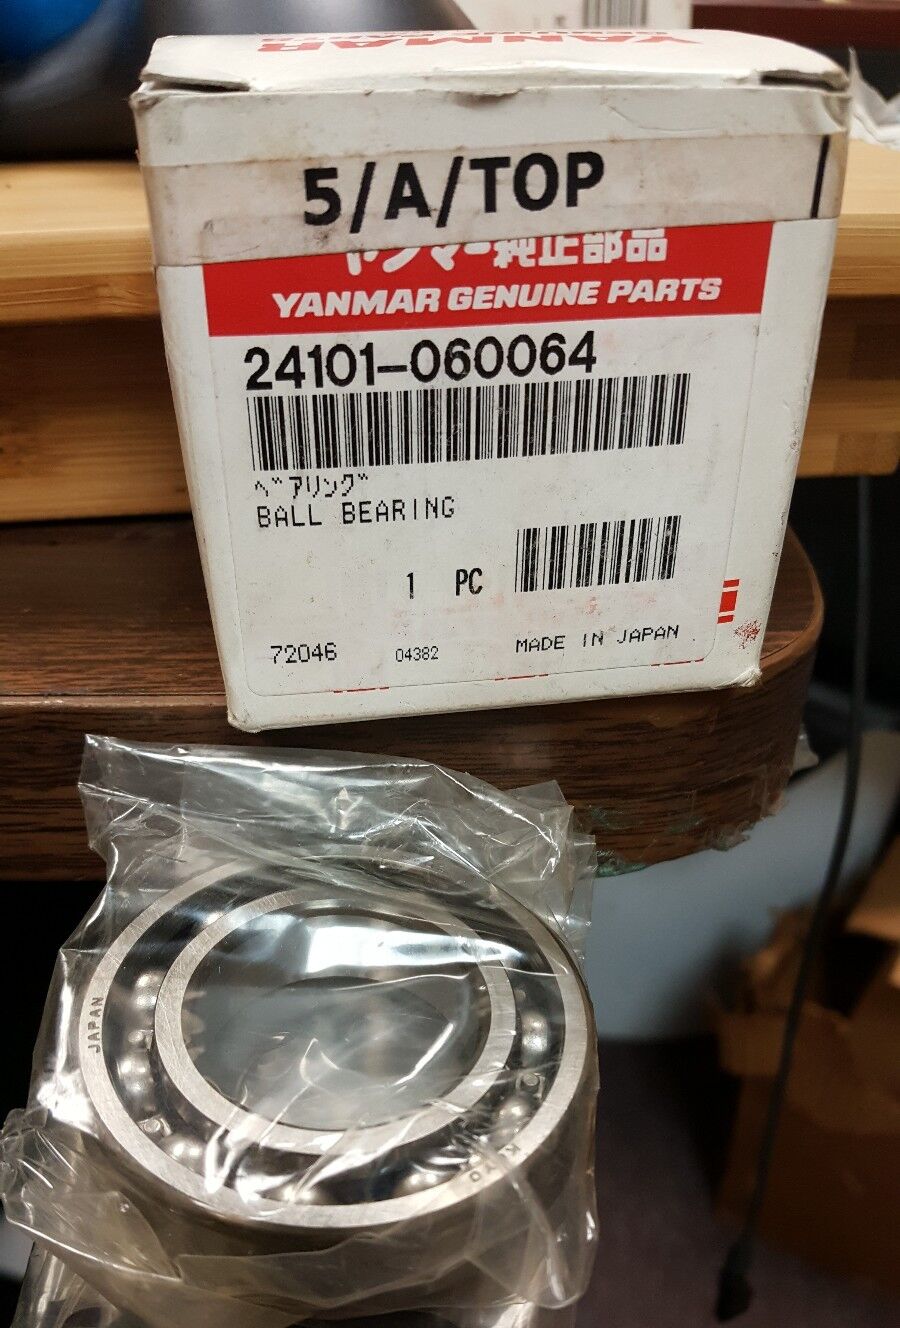 YANMAR Genuine Ball Bearing # 24101-060064